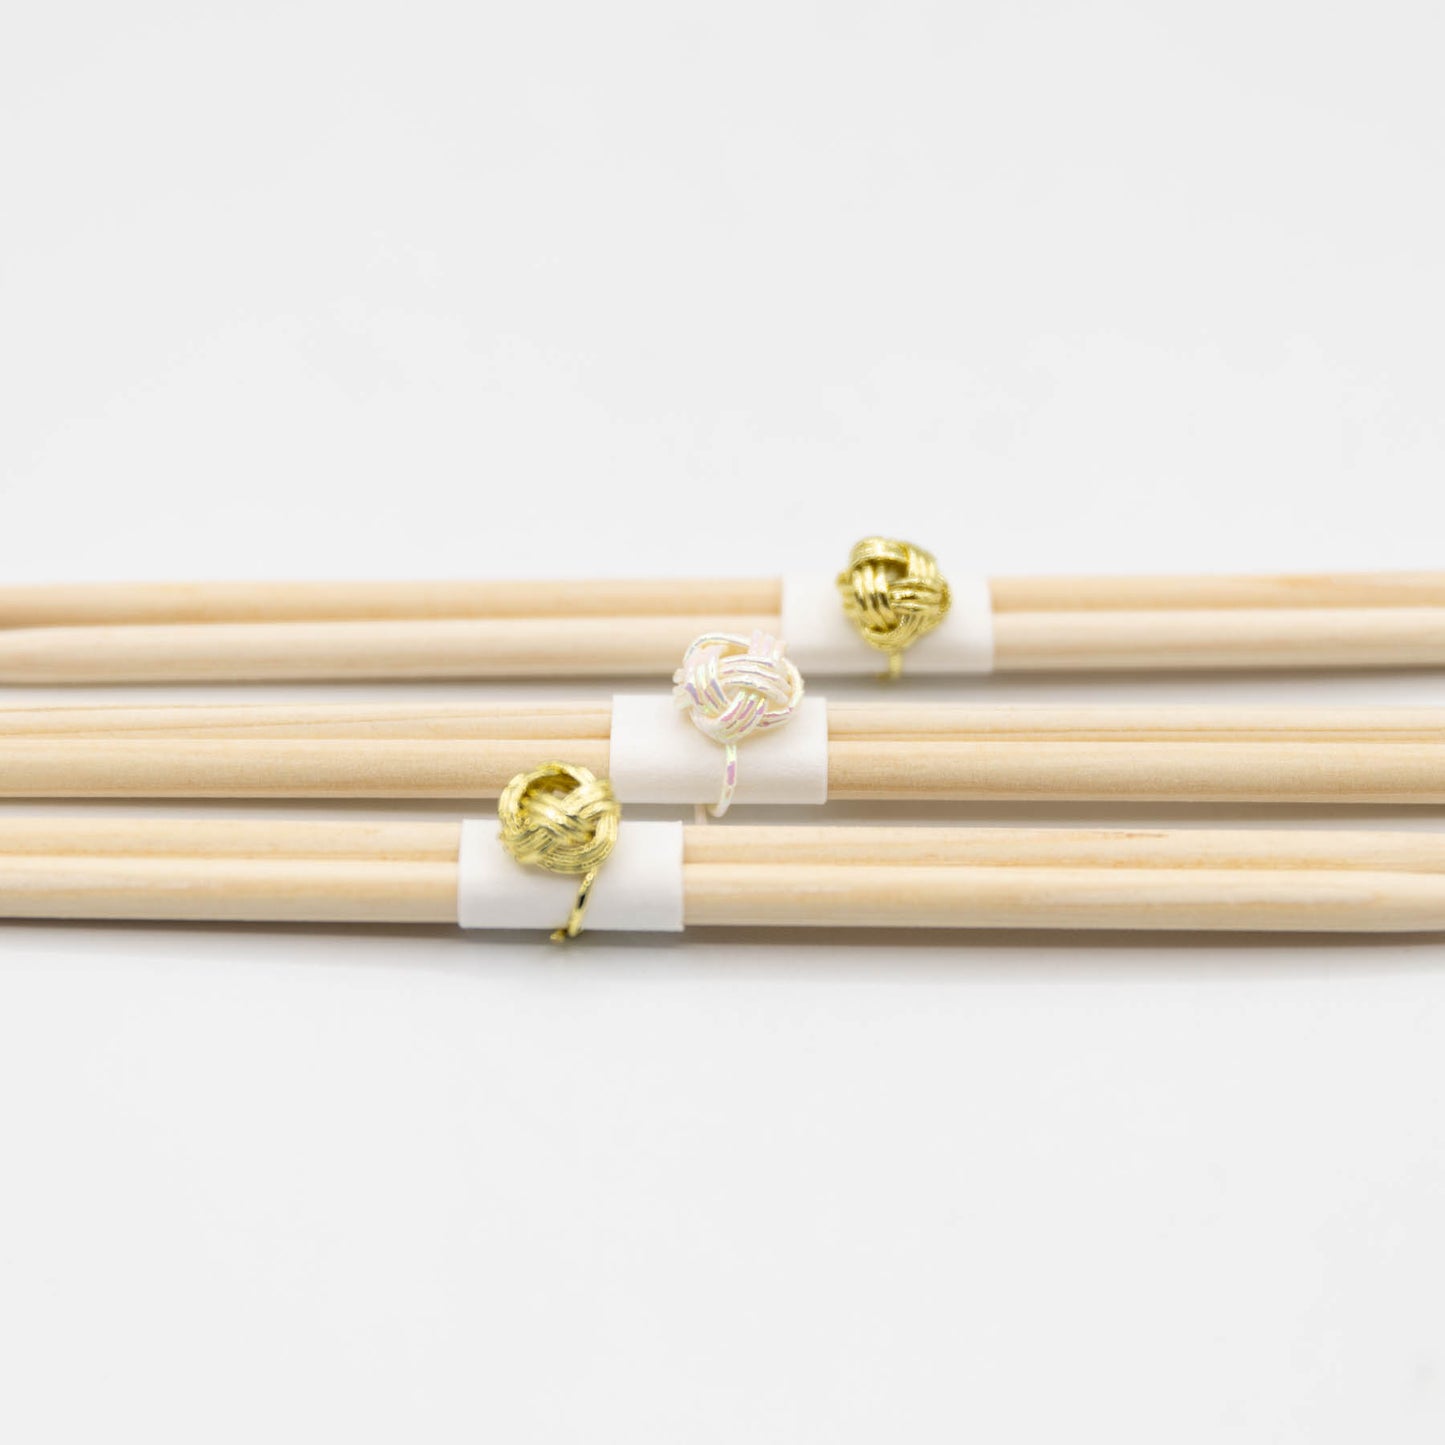 Medetaya Modern - Chopstick 3pcs Set- Gold